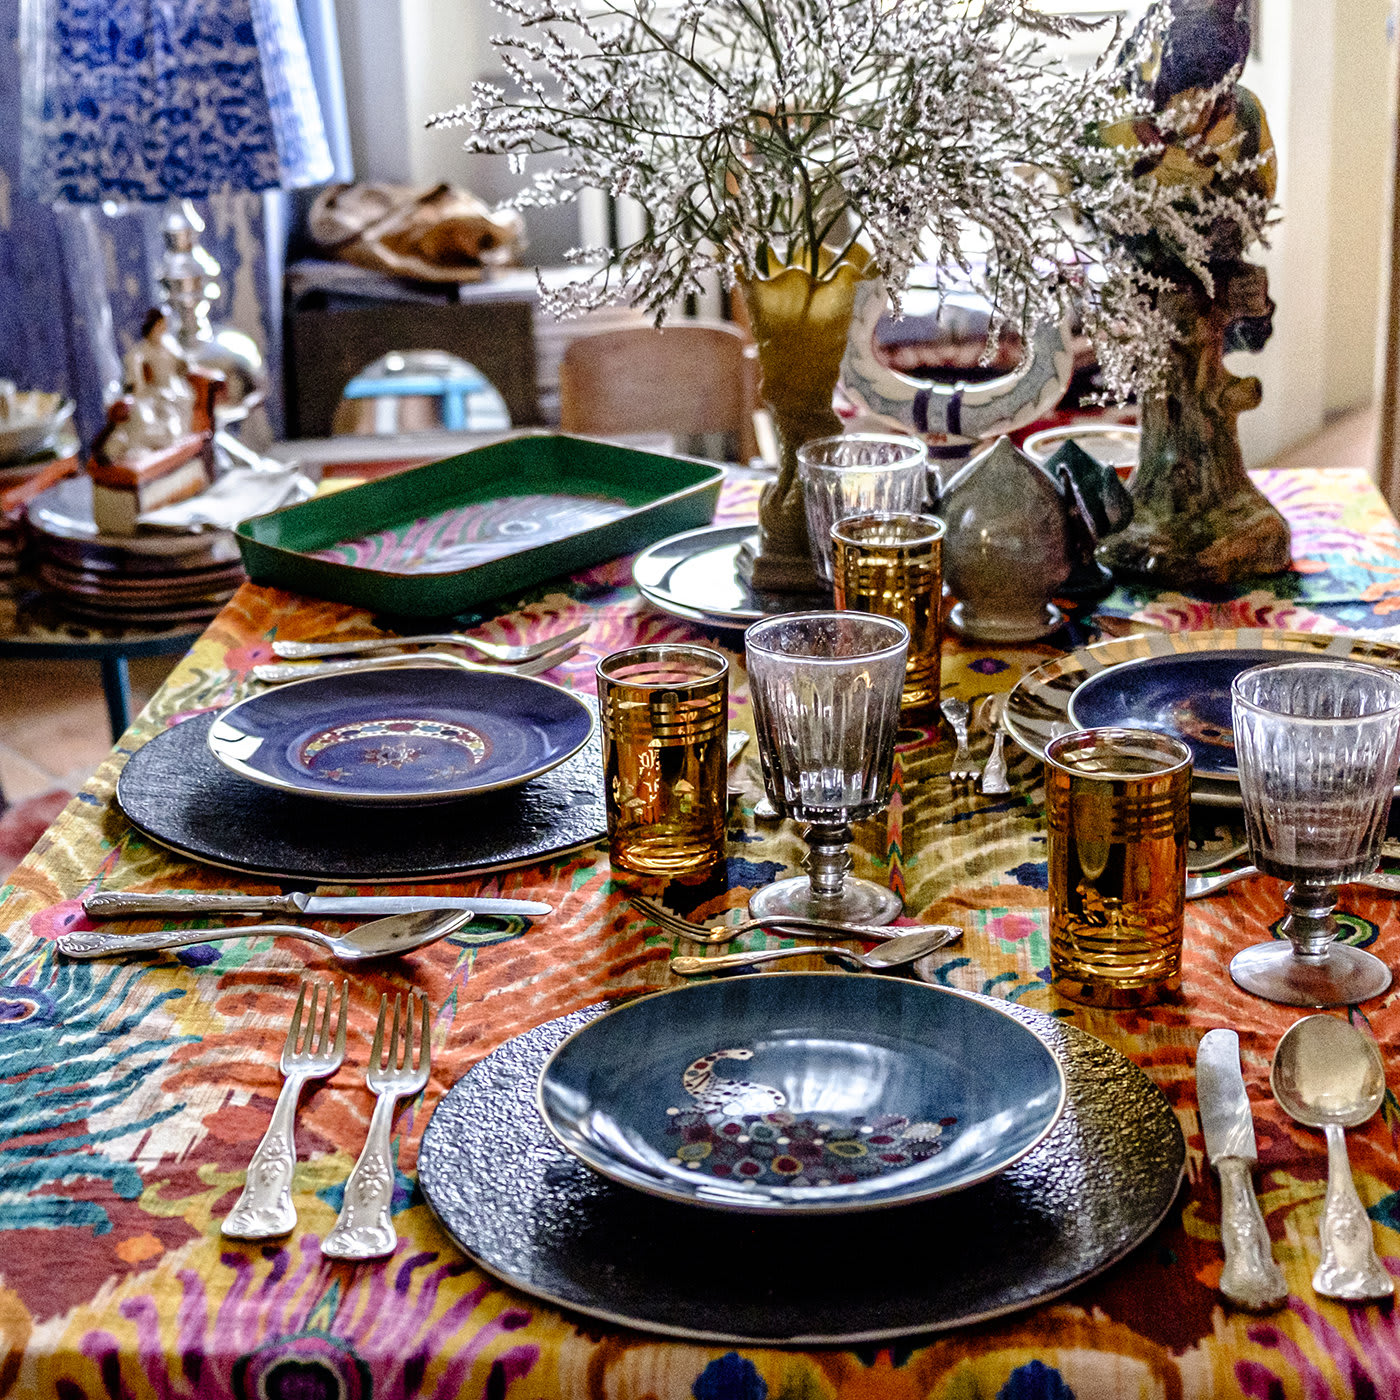 Set of 2 Blue Dinner Plates by Matthew Williamson - Les Ottomans